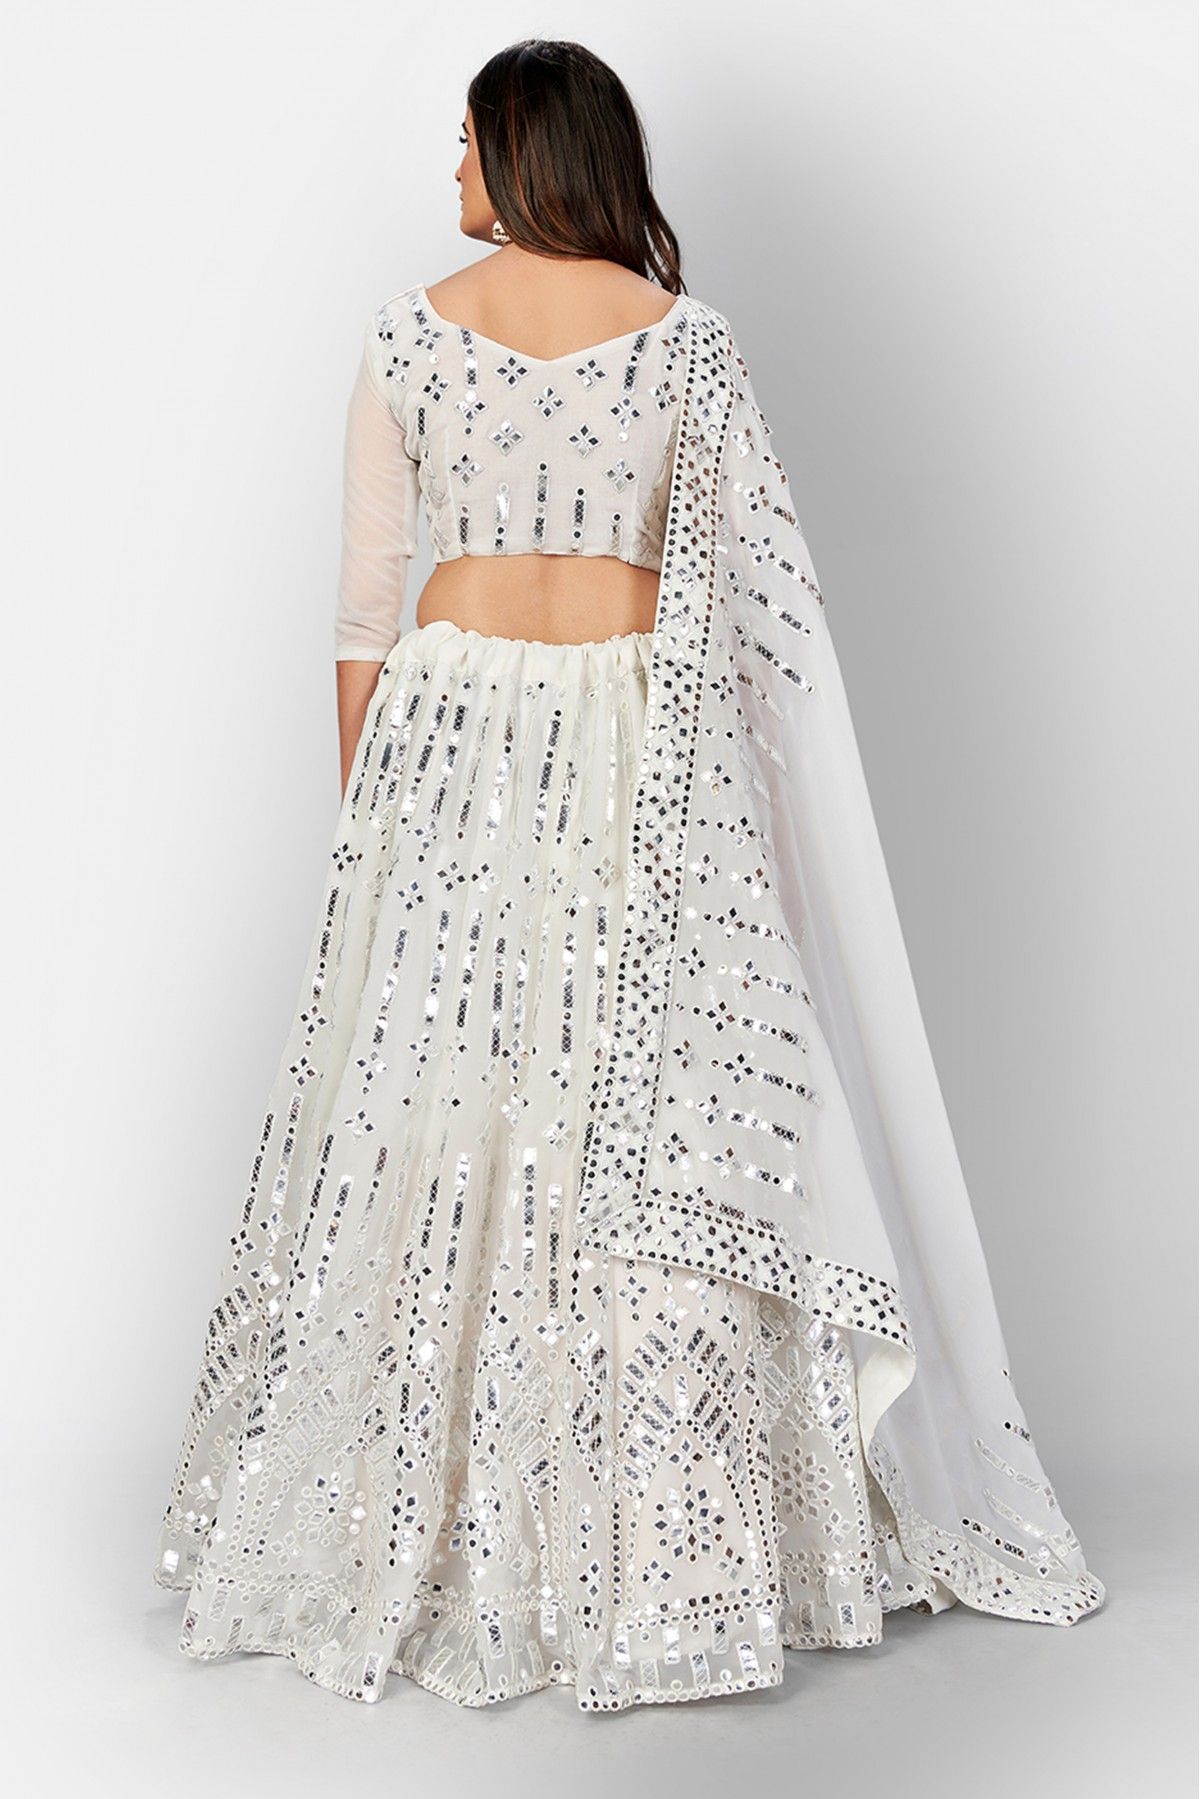 Georgette Embroidery Lehenga Choli In White Colour - LD5411759